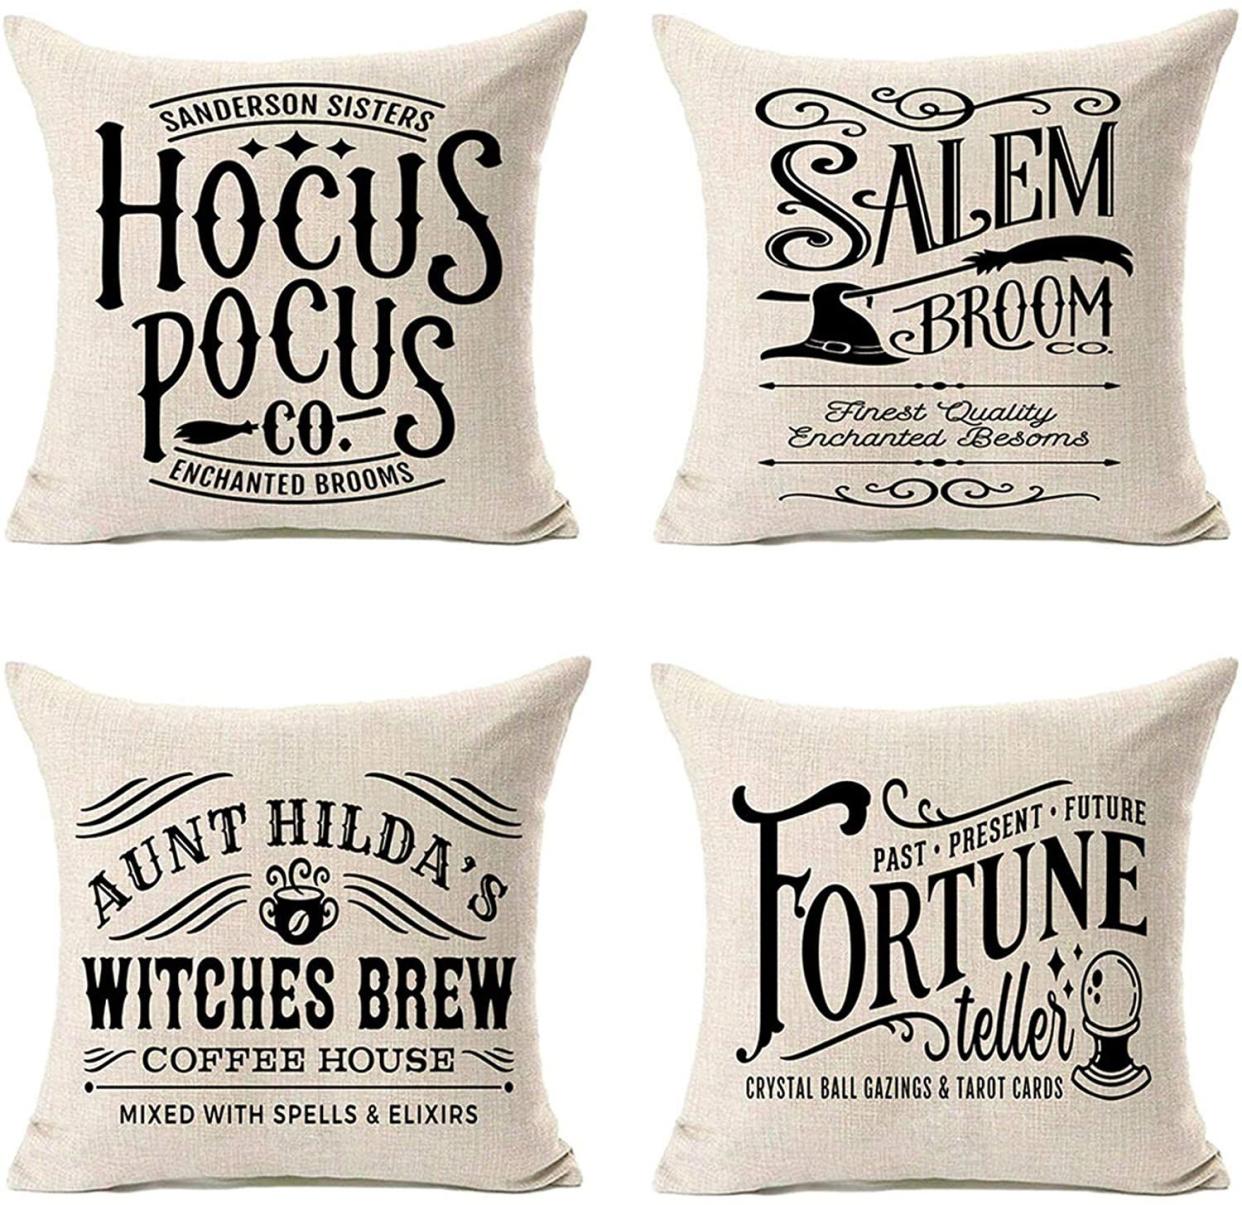 Mfgneh Hocus Pocus Pillow Covers, 4 ct.